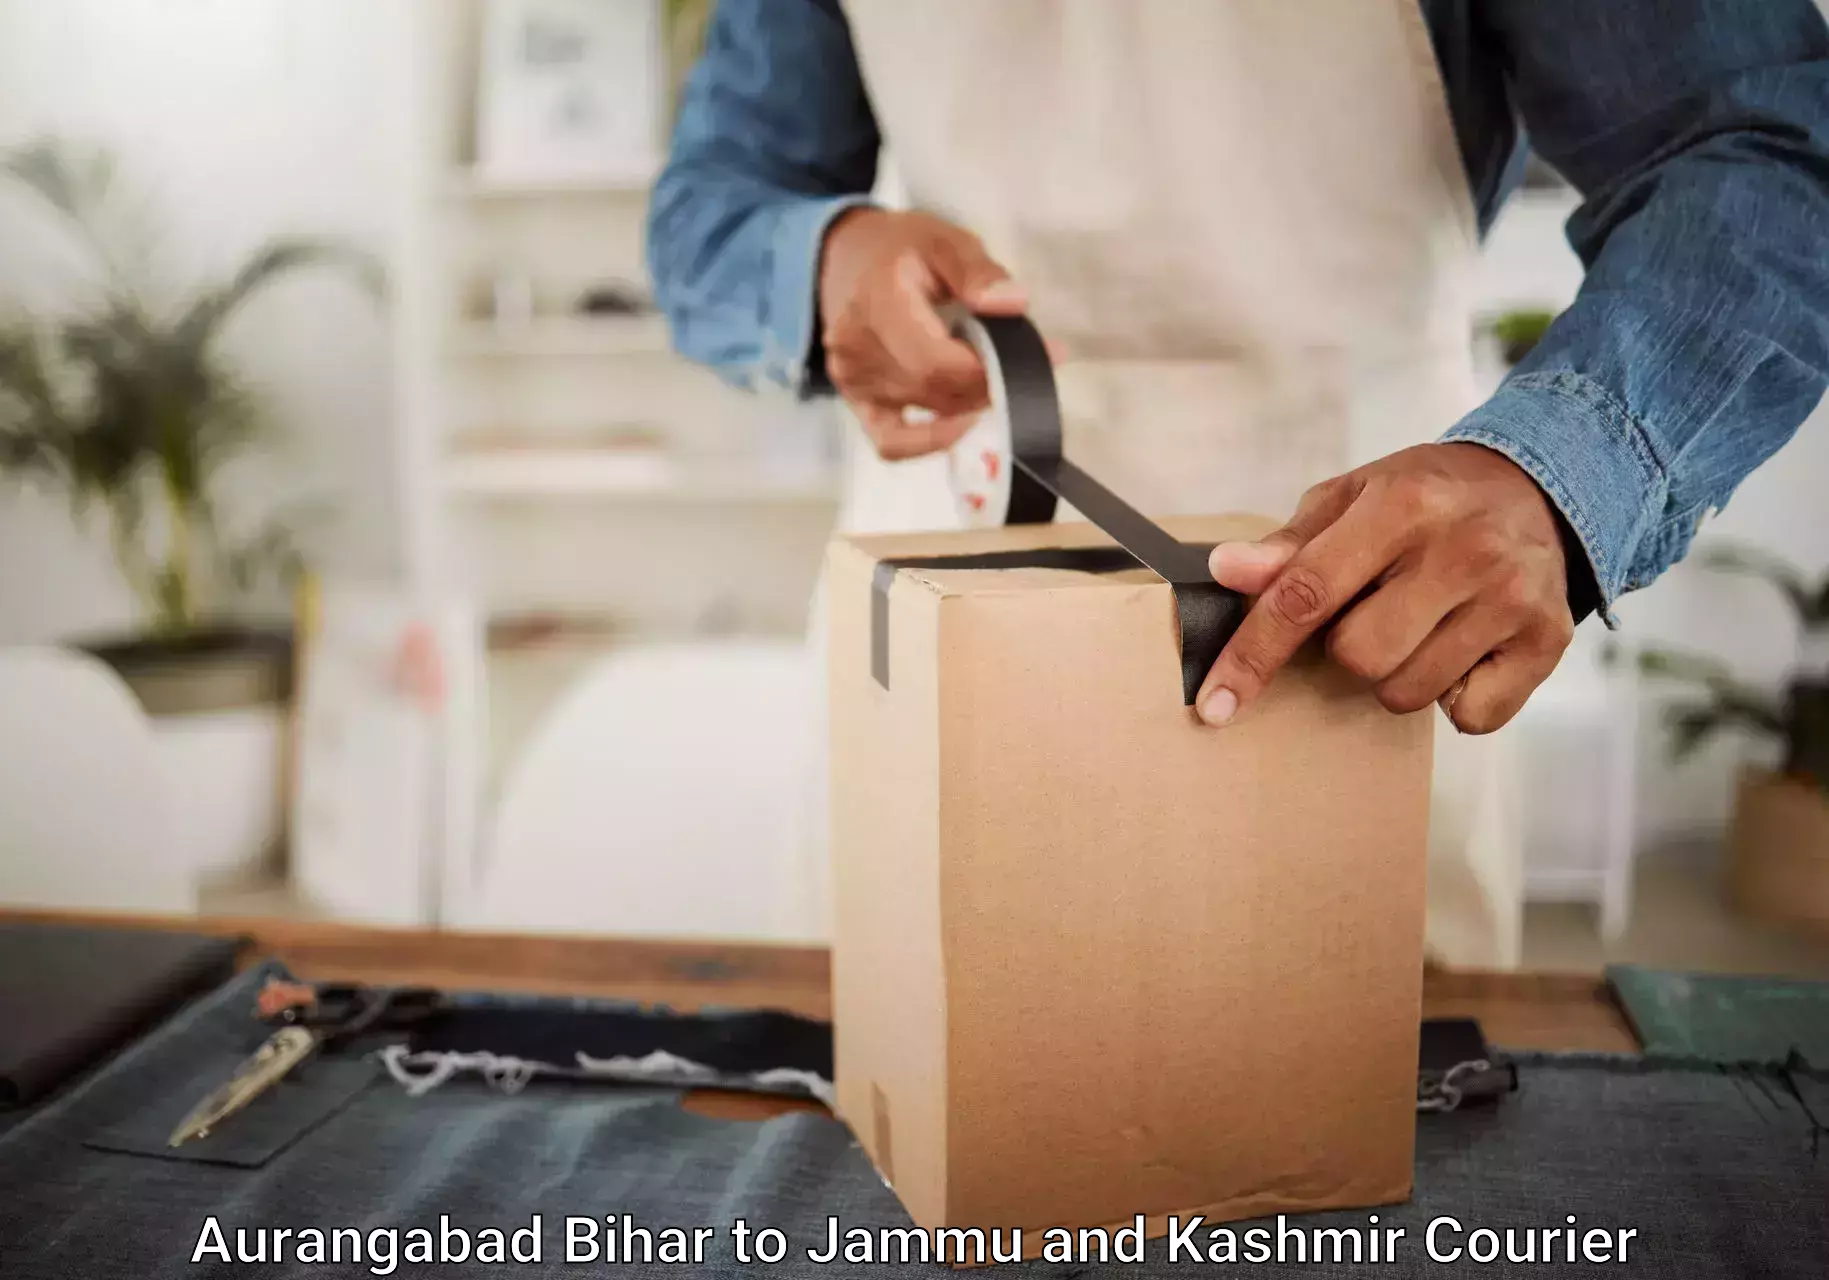 Baggage shipping experts Aurangabad Bihar to Bandipur